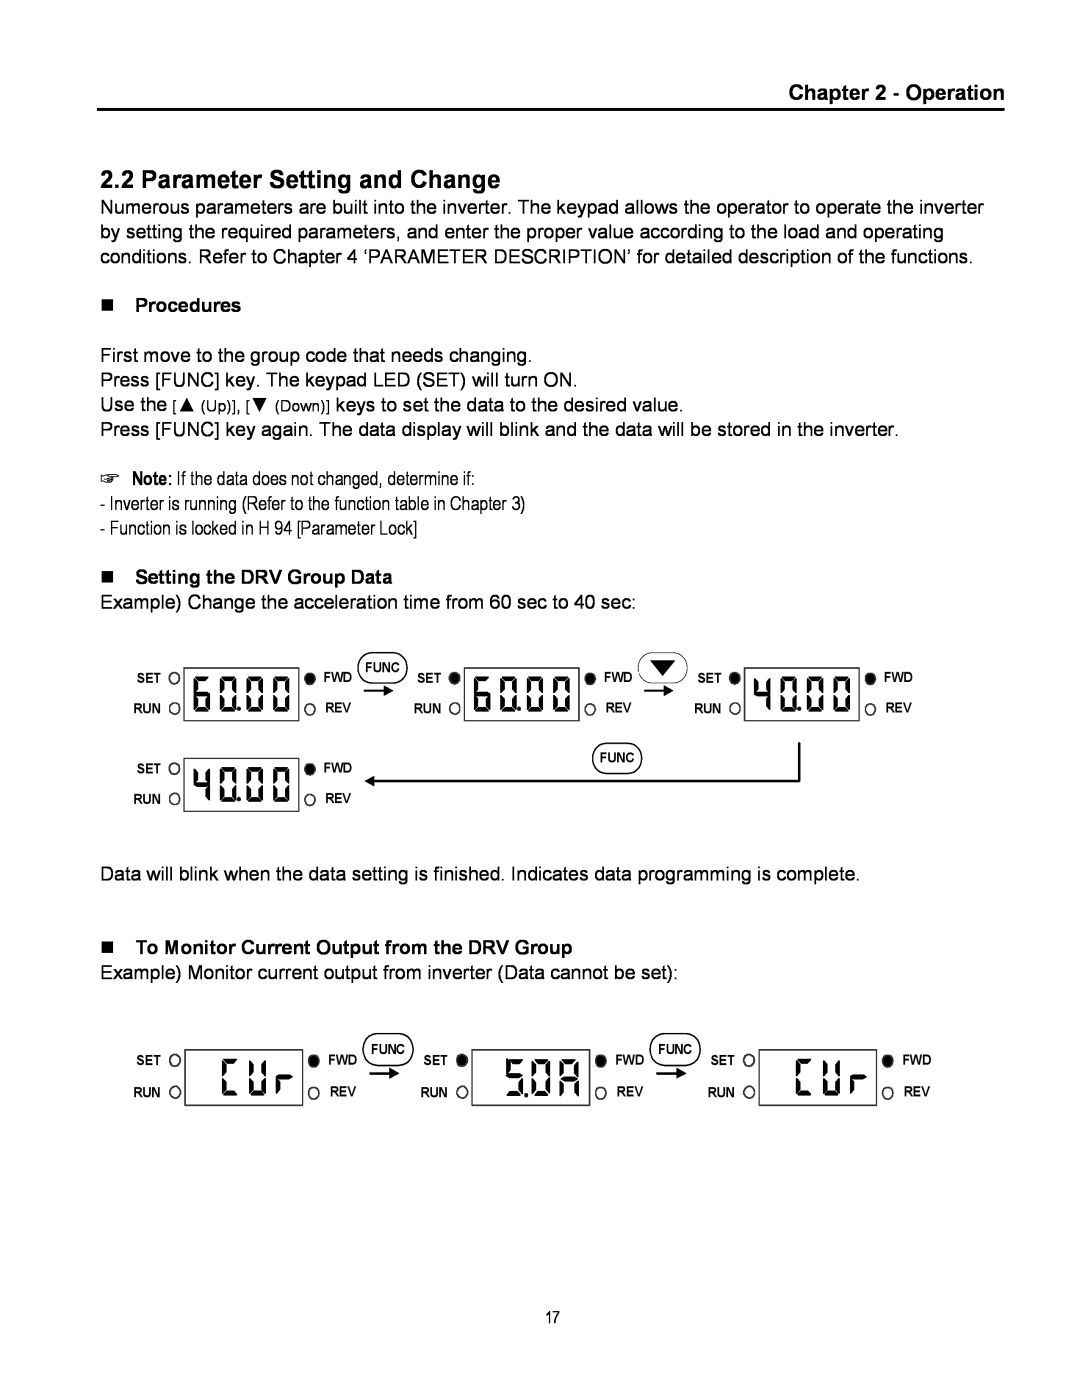 Cleveland Range inverter manual Parameter Setting and Change, Operation 